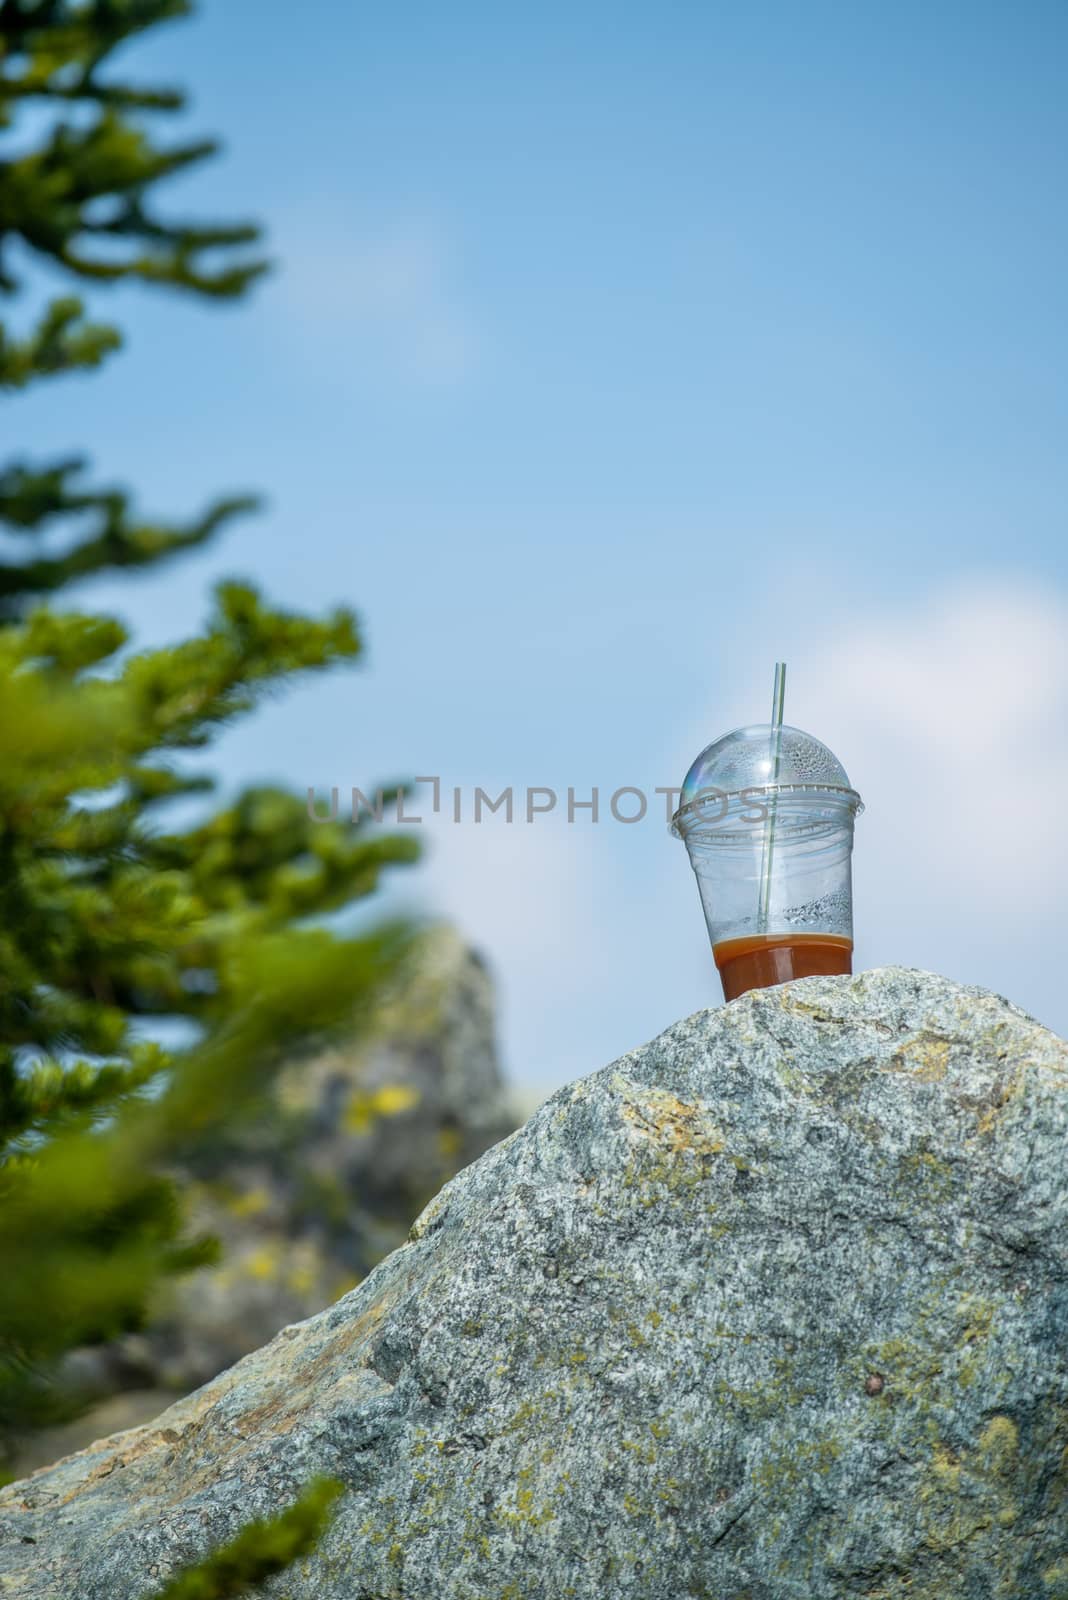 Plastic bottle abandoned on a rock.